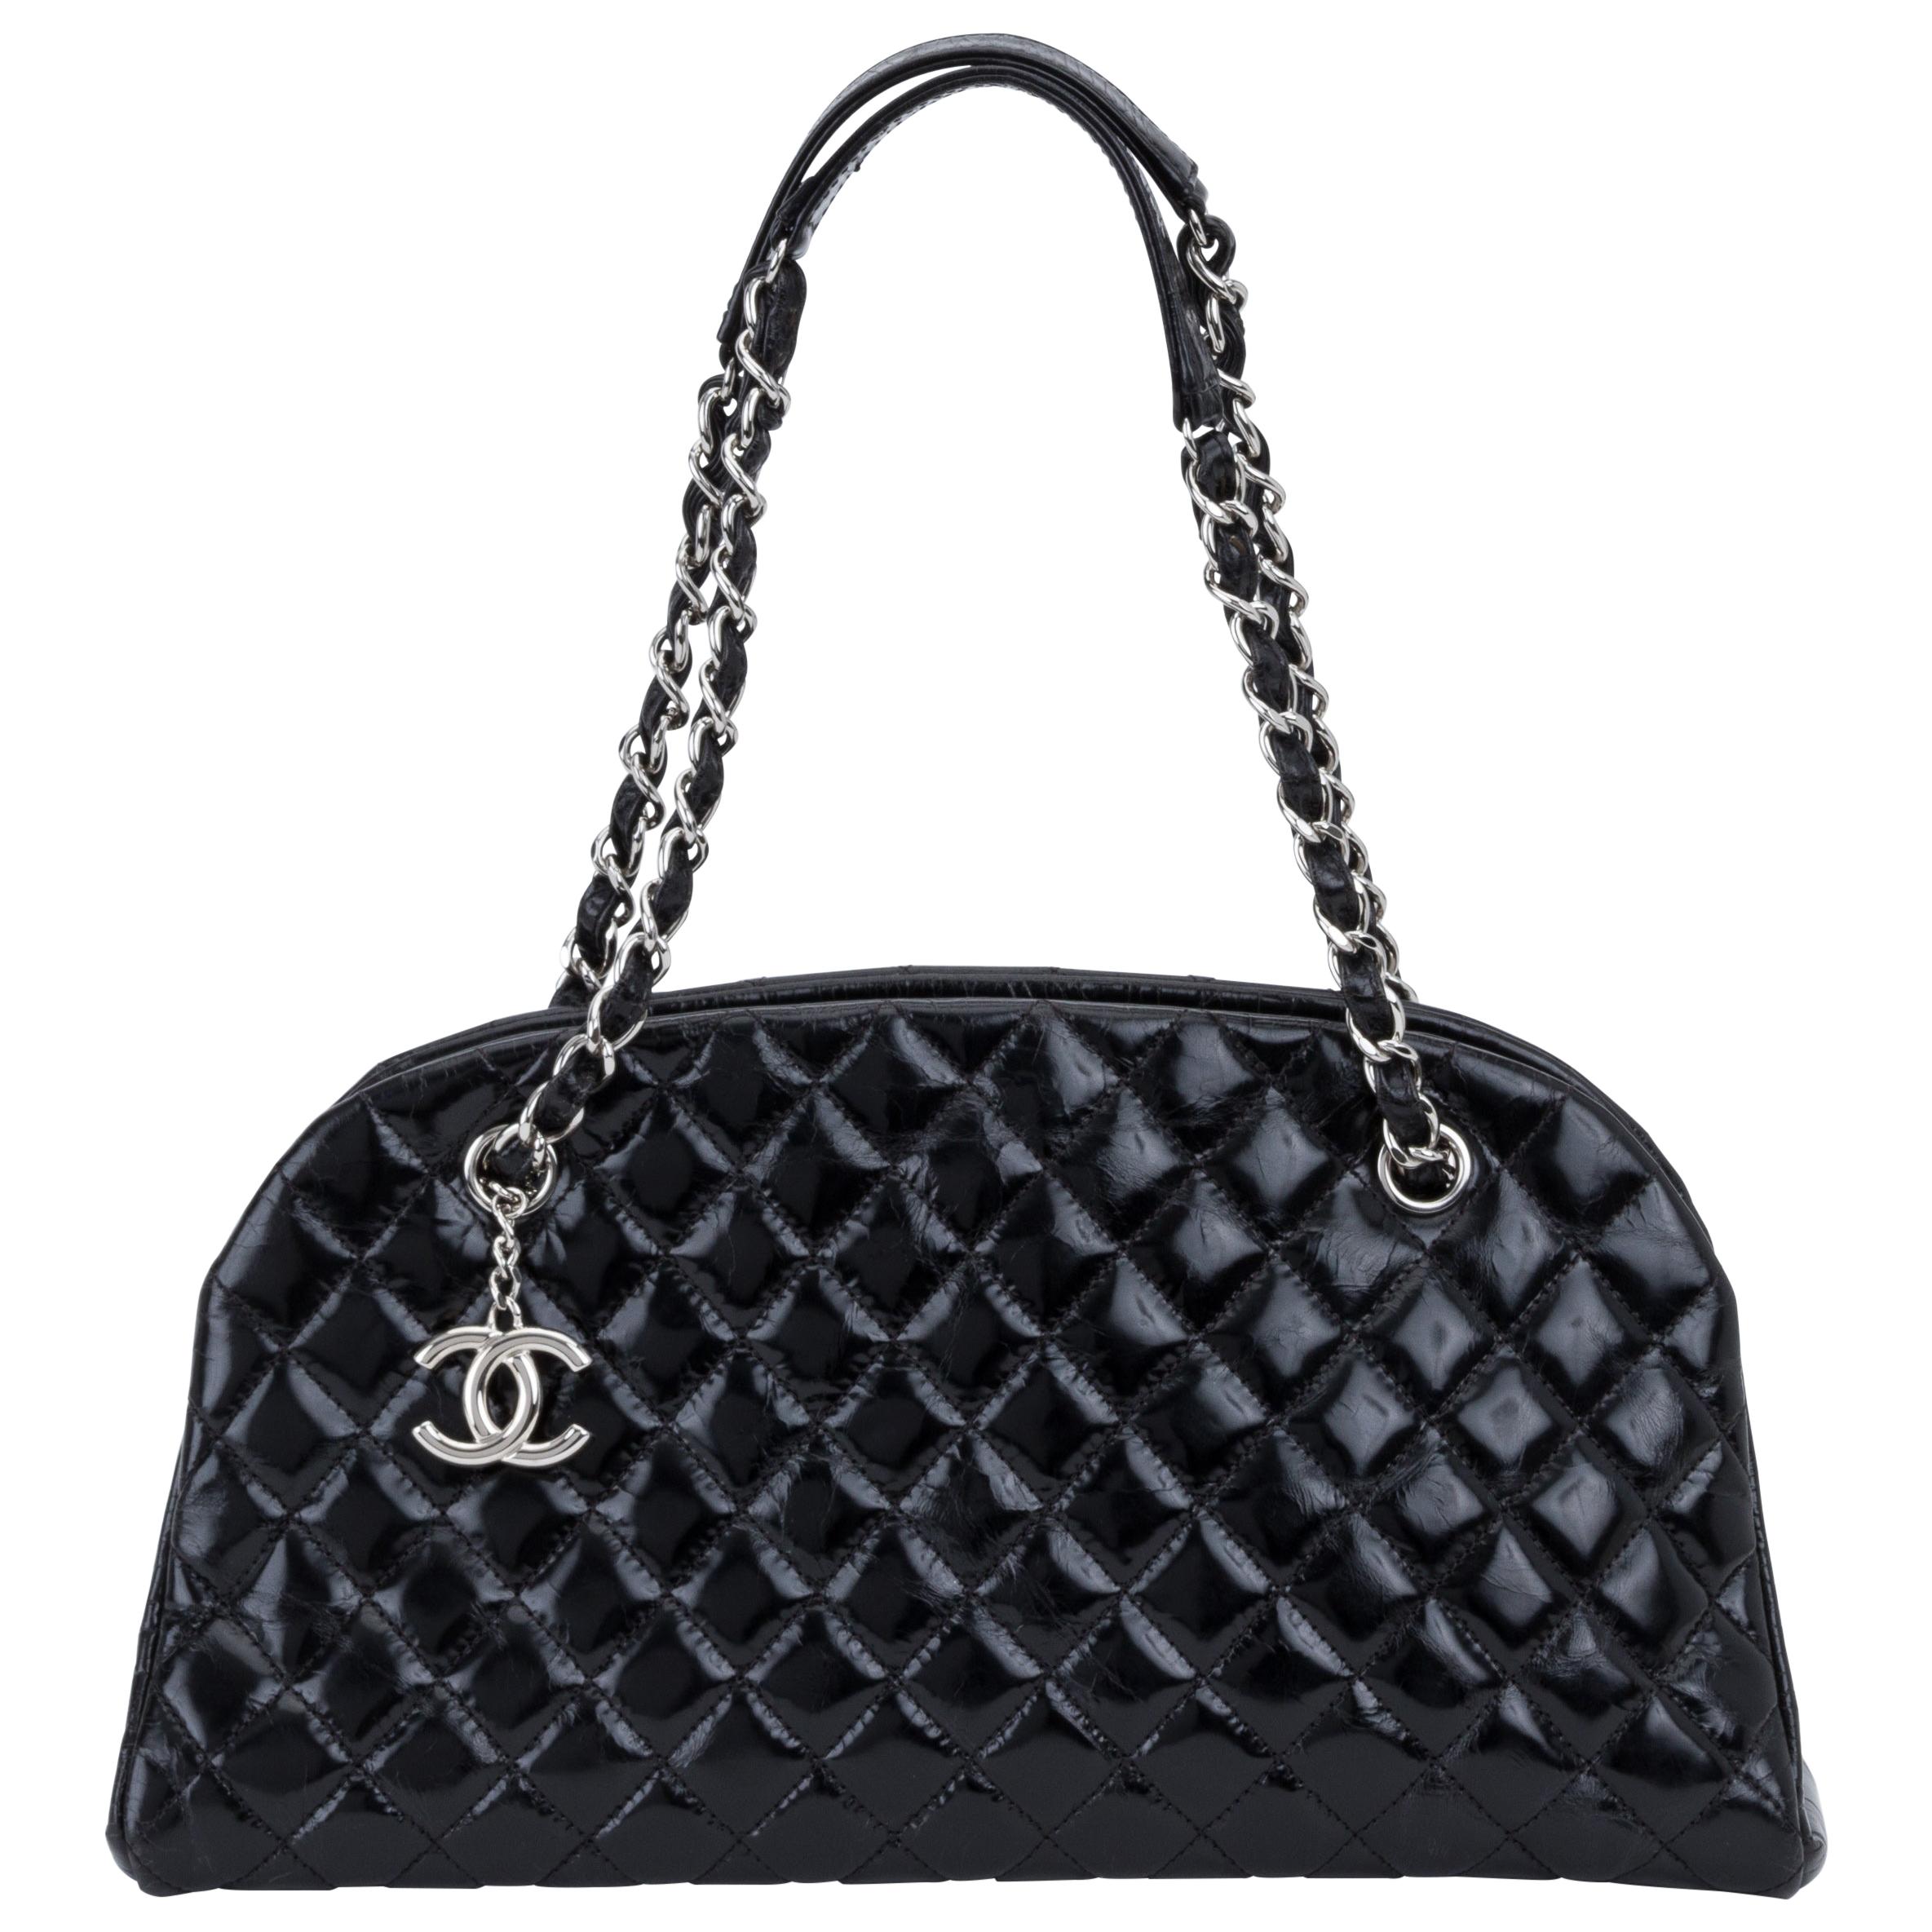 Chanel Black Patent Mademoiselle Medium Bag